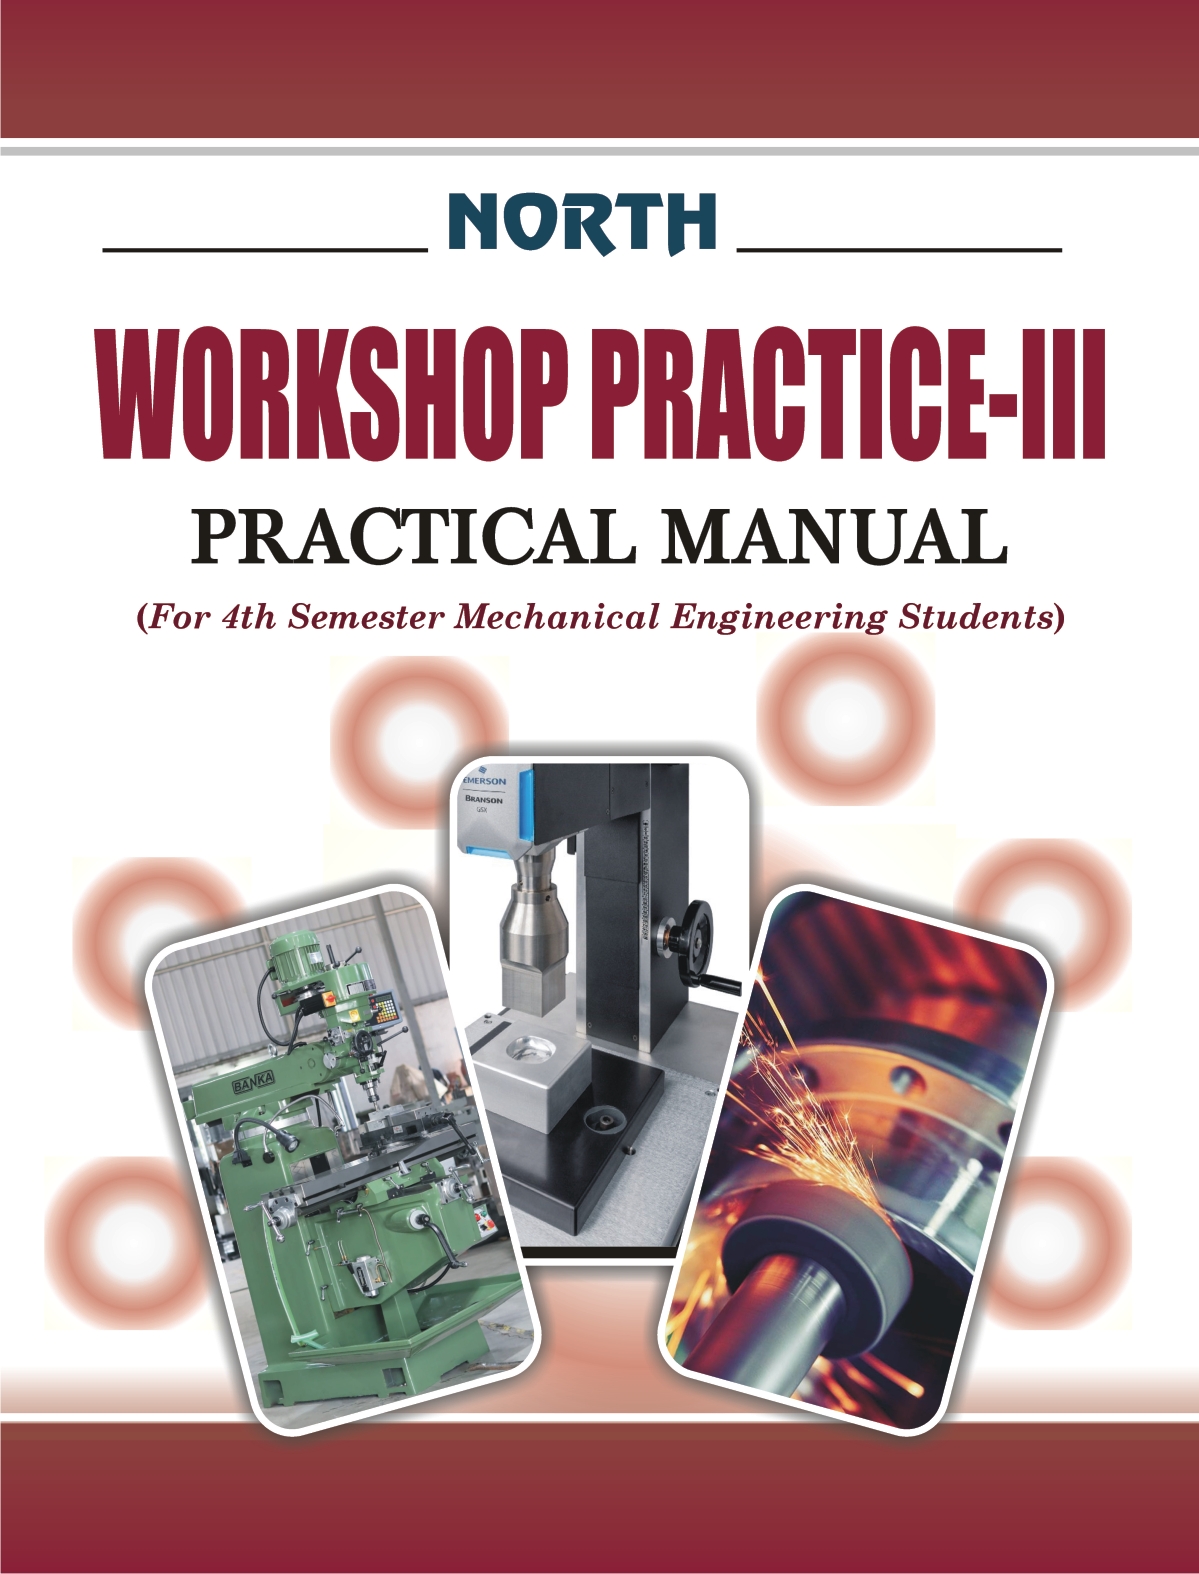 Workshop Practice-III
Practical Manual